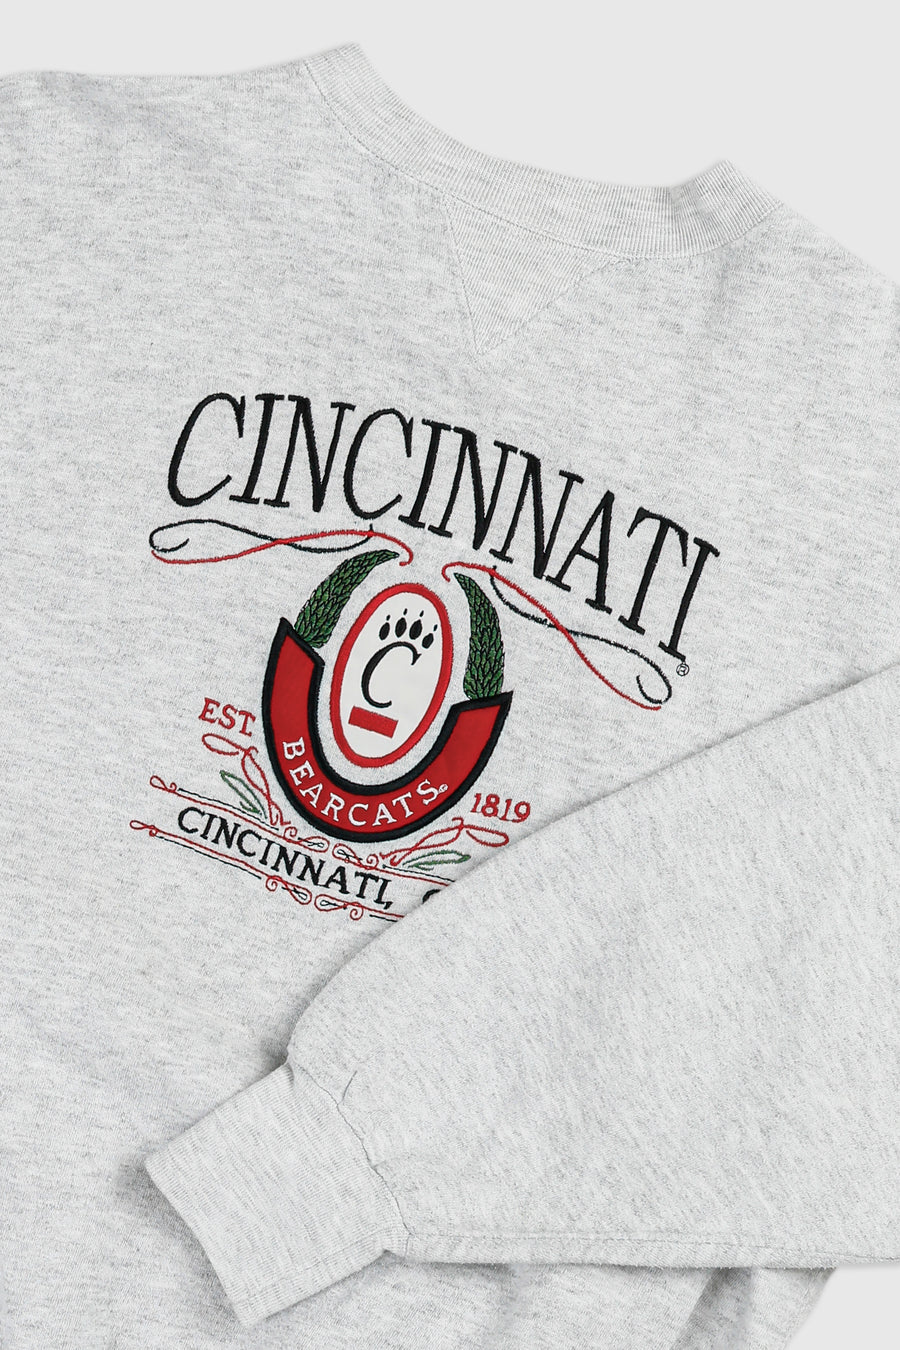 Vintage Cincinnati Sweatshirt - L